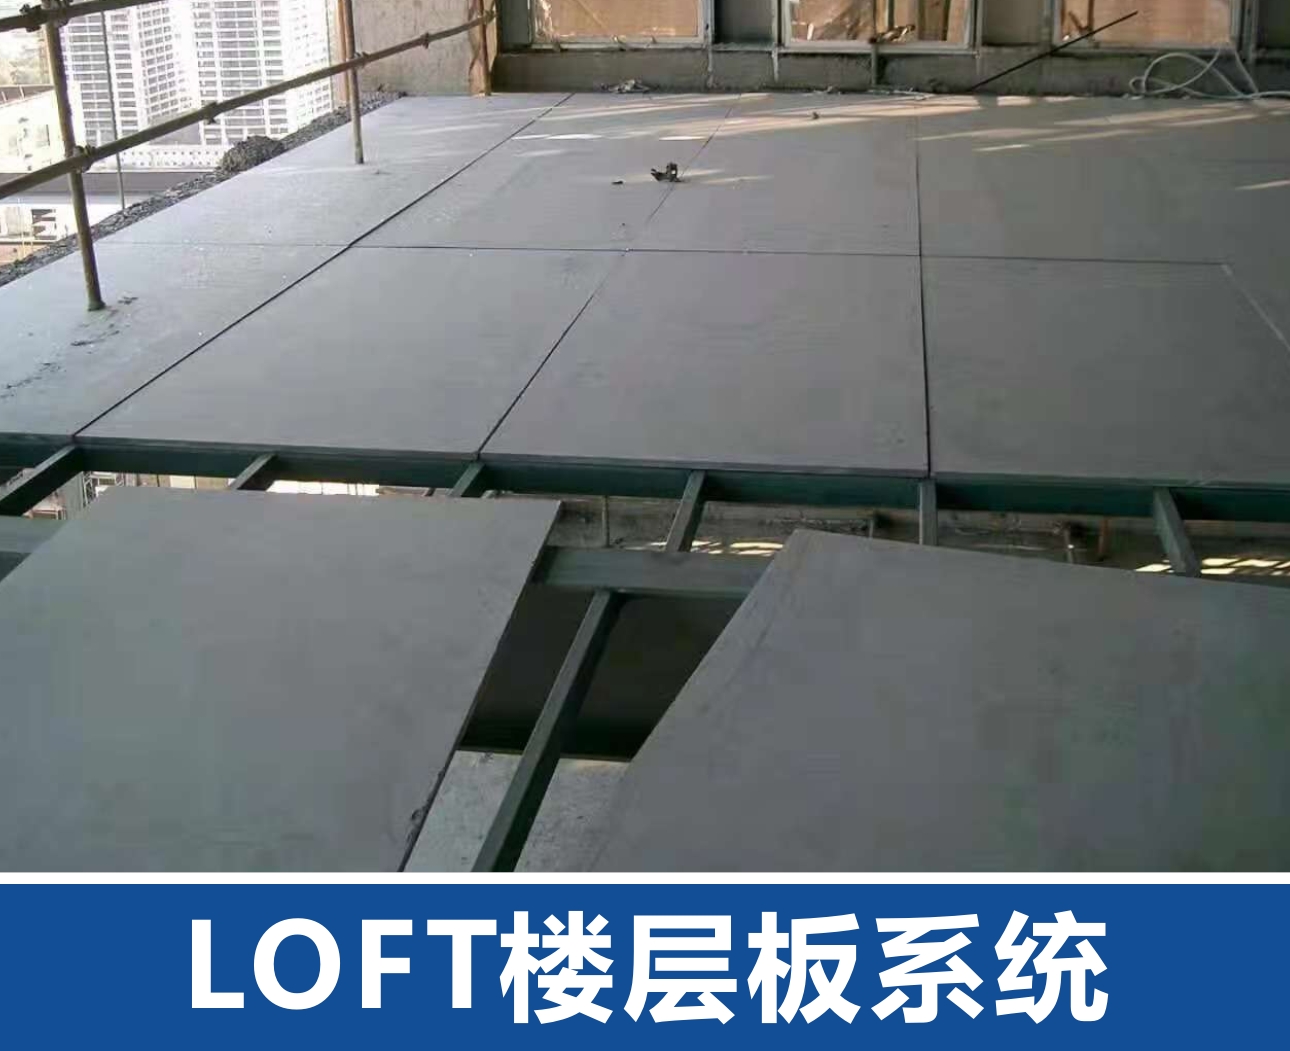 LOFT楼层板系统